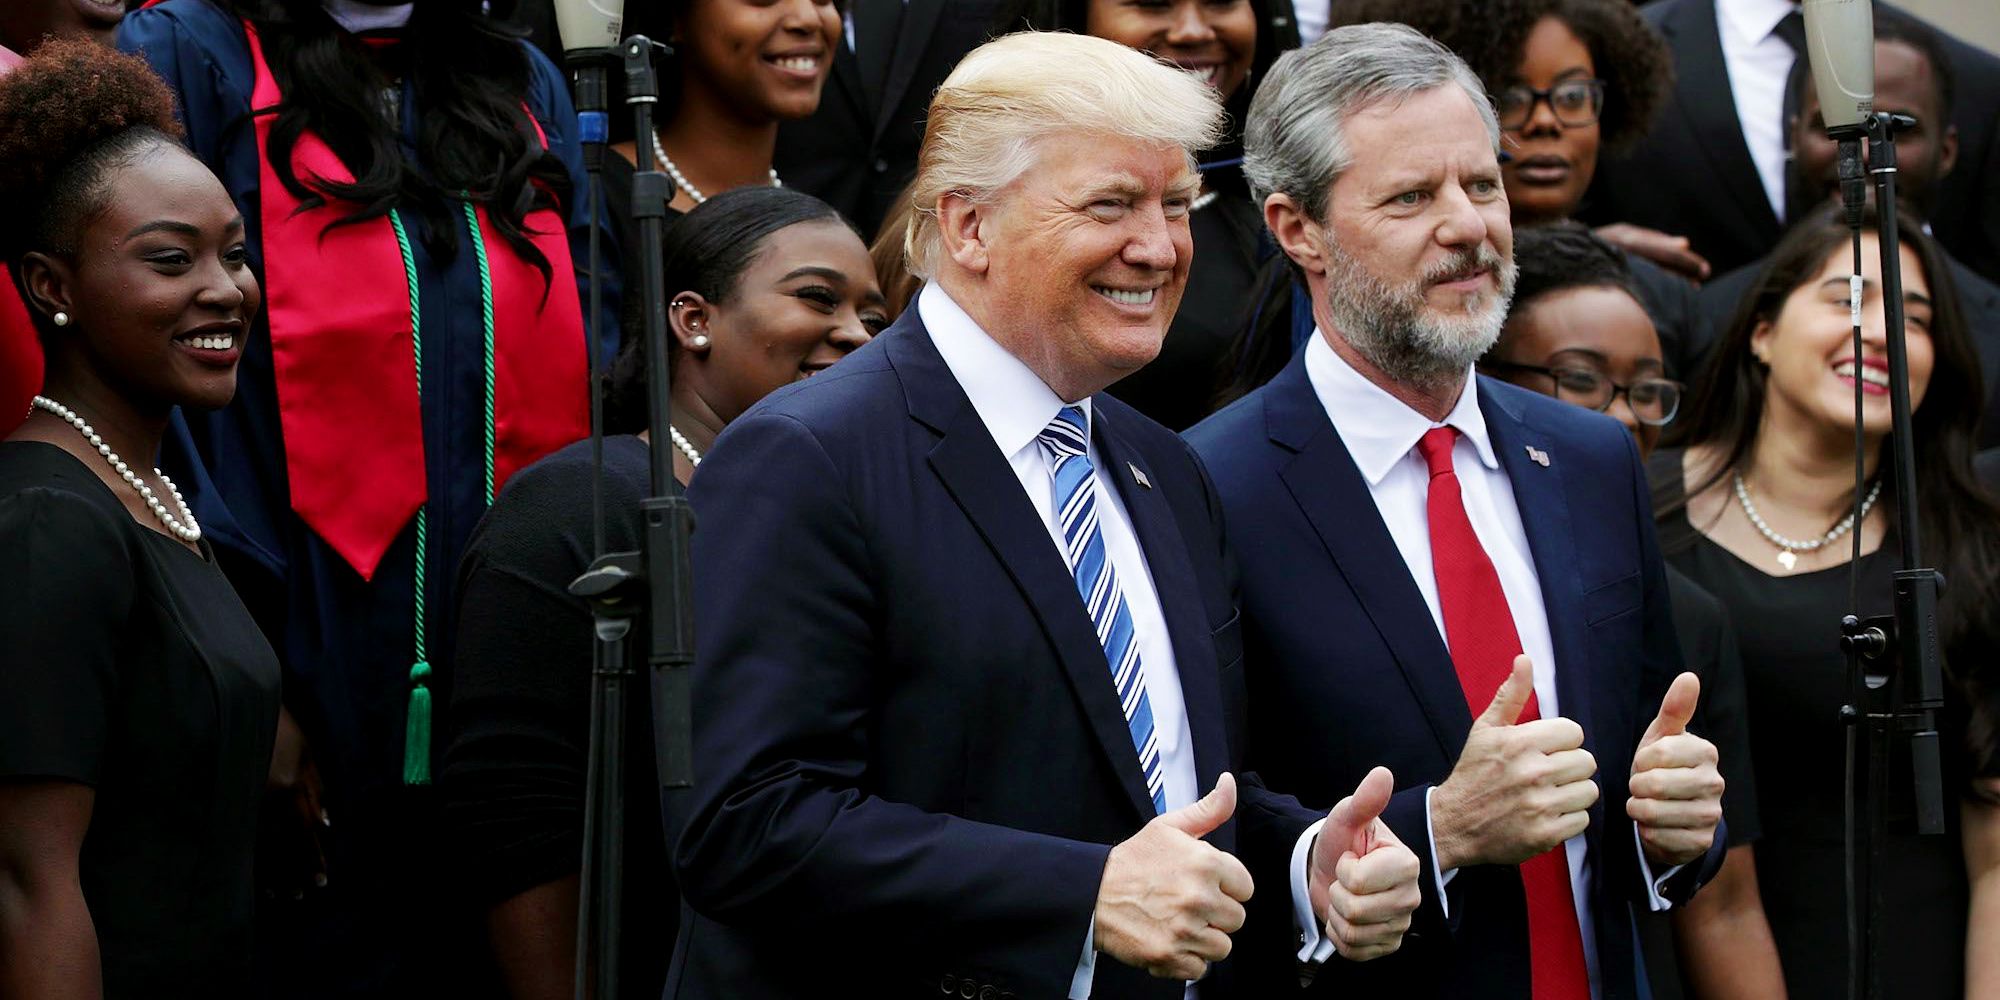 Evangelical Leaders Defend Trump After Stormy Daniels Hush Money Report